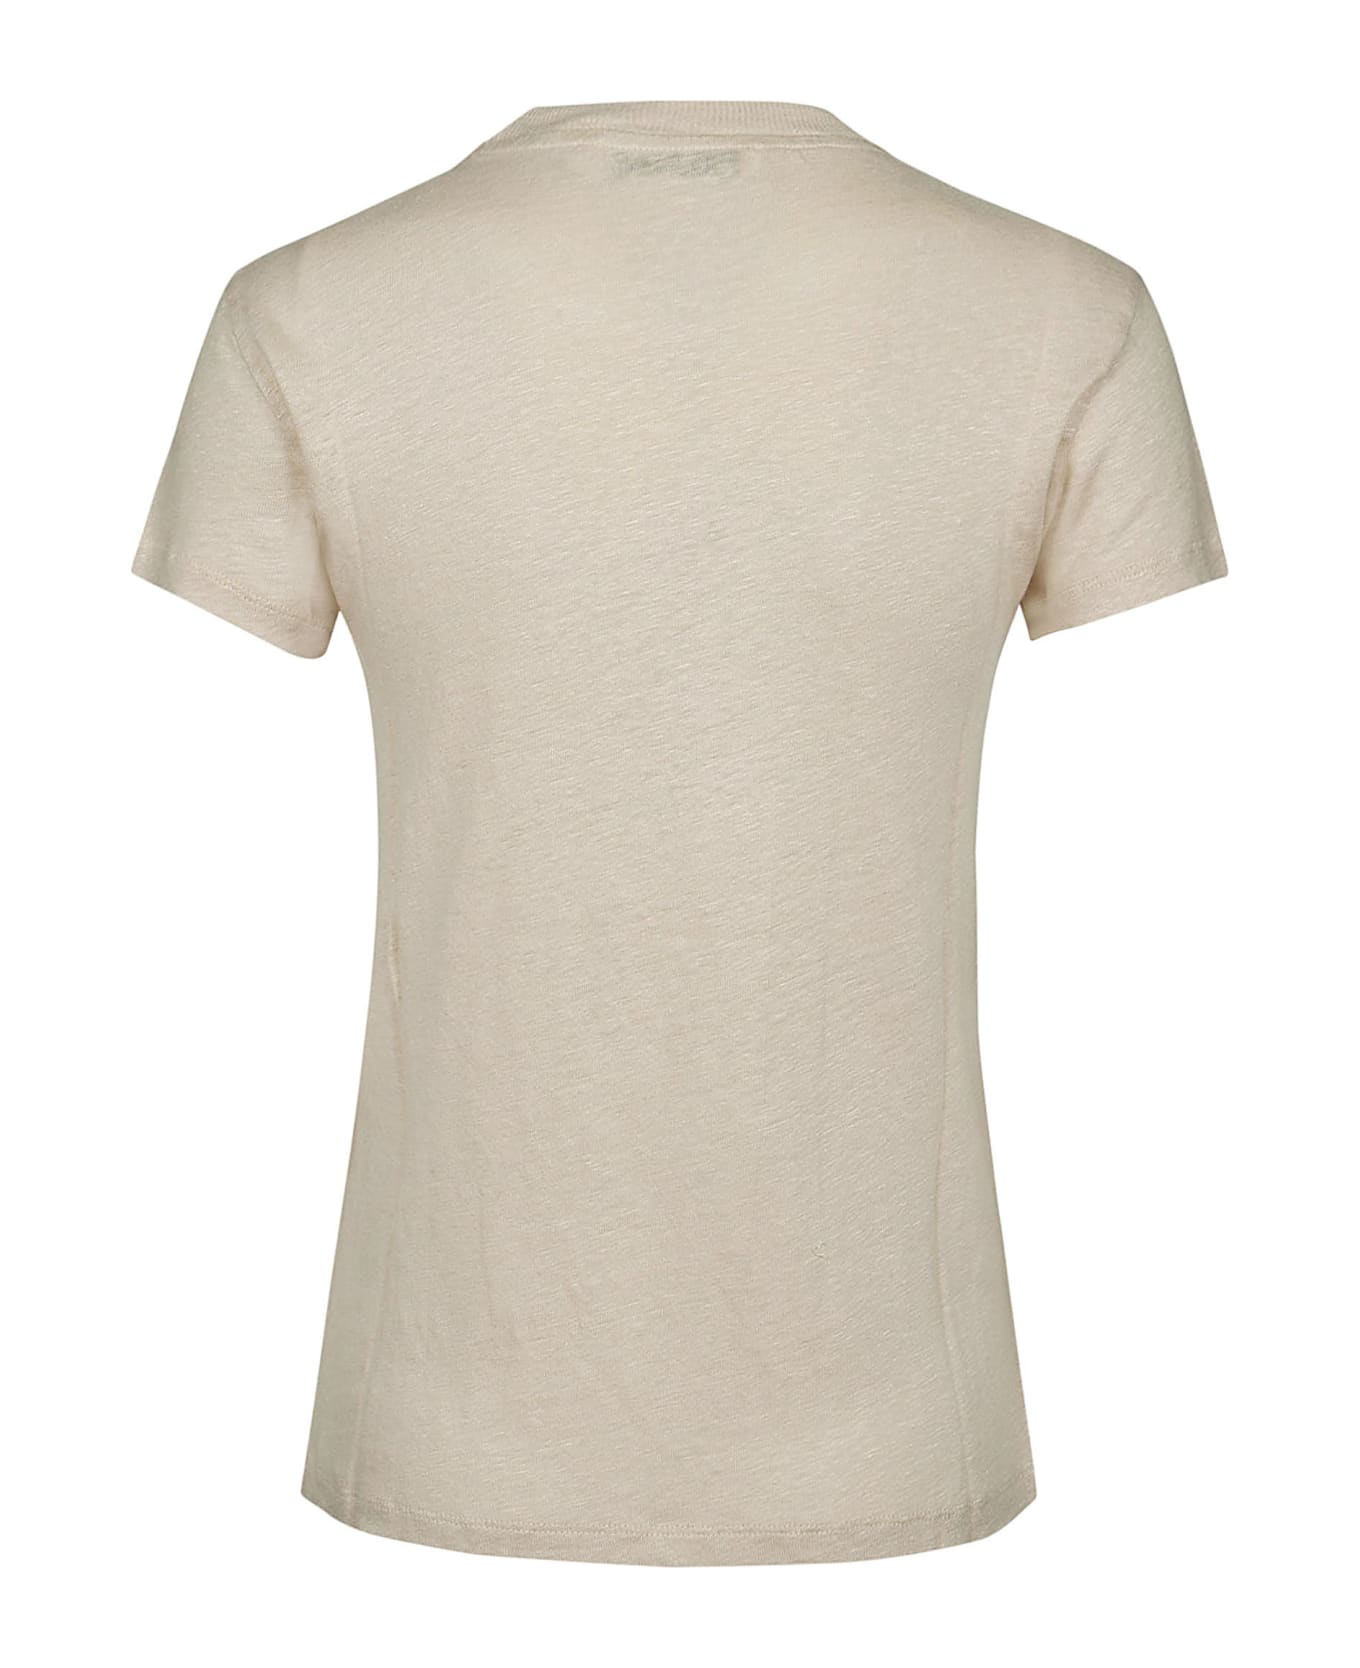 IRO Third T-shirt - Light Beige